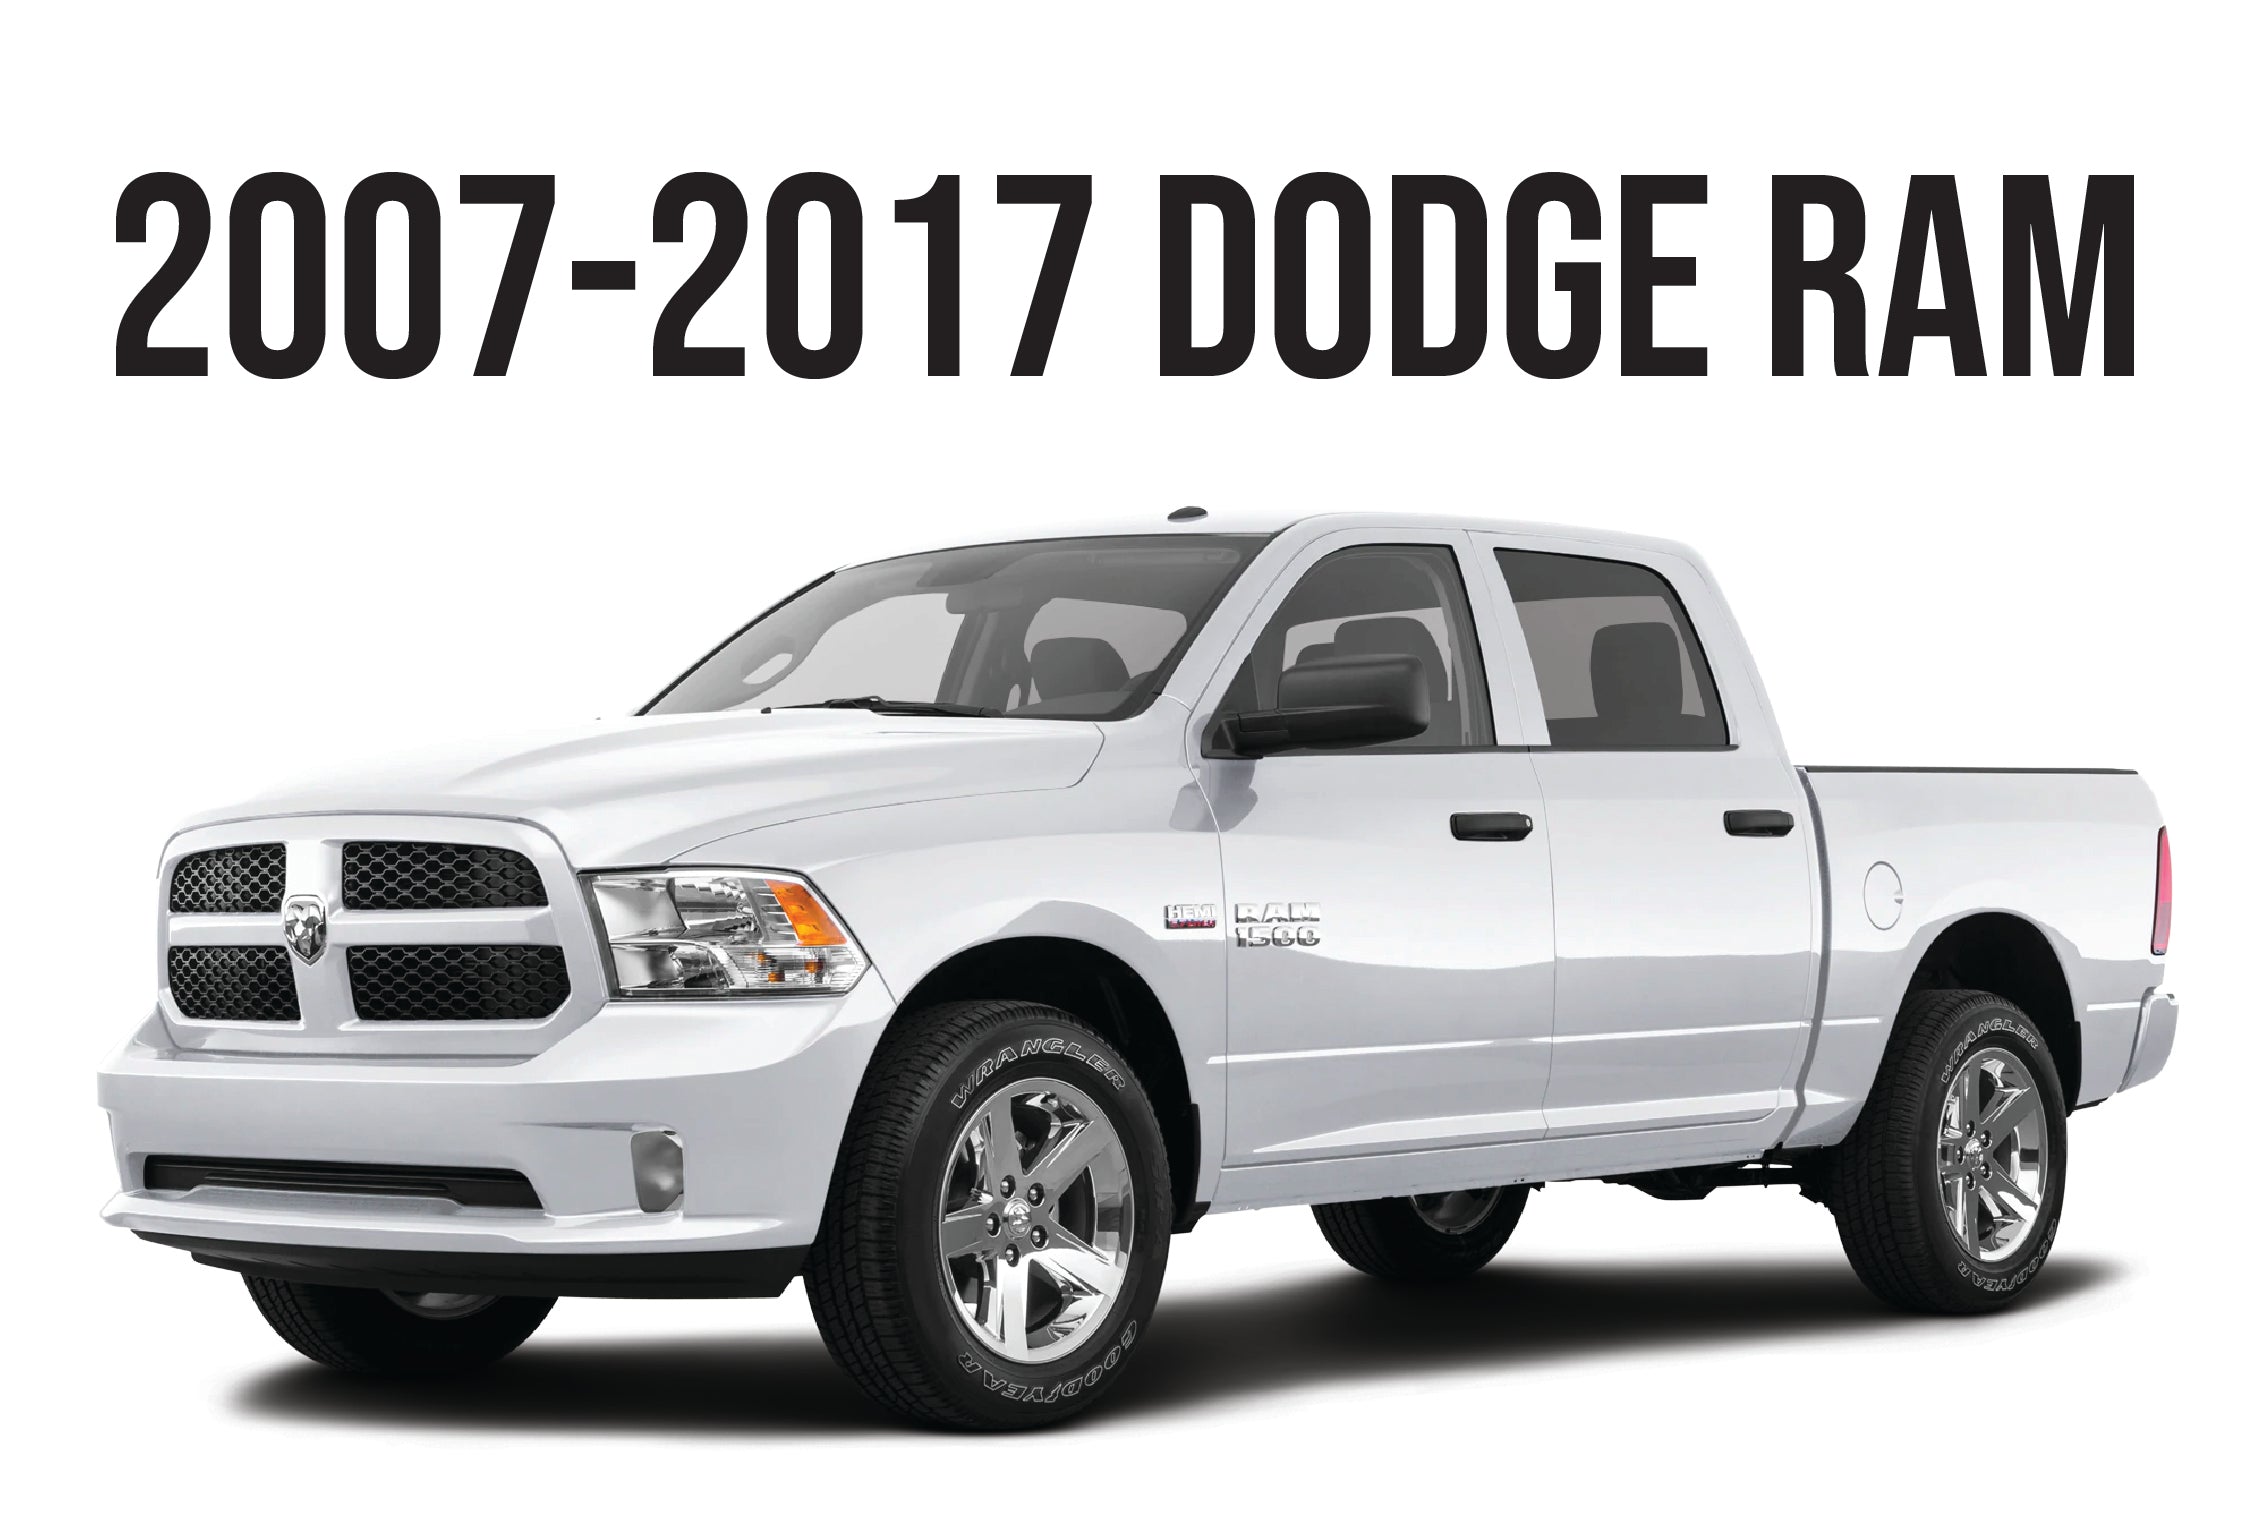 2007-2017 DODGE RAM